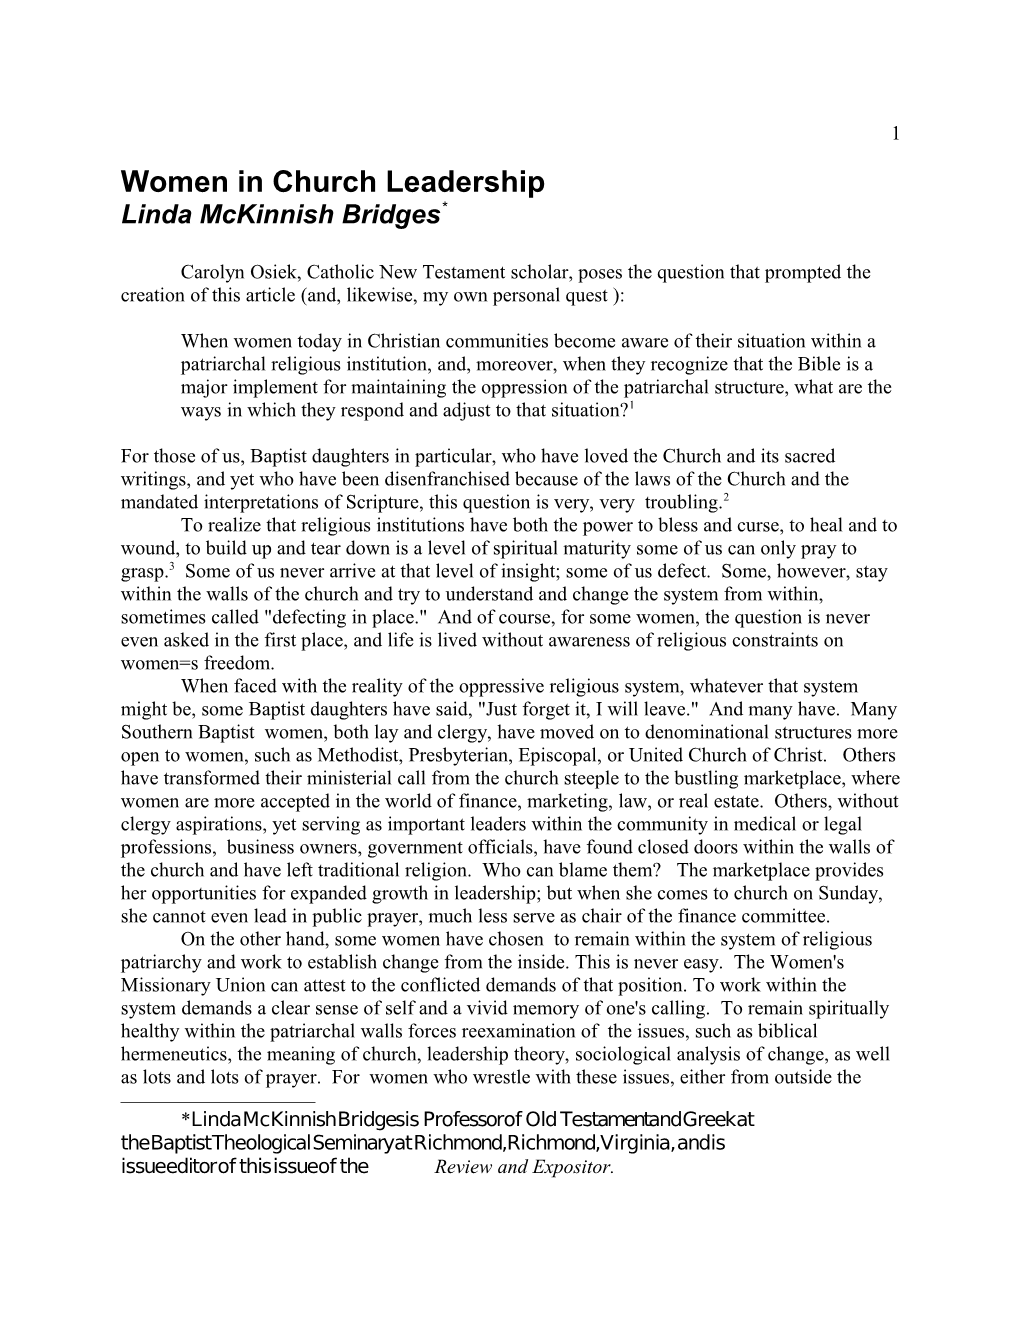 Women in Church Leadership